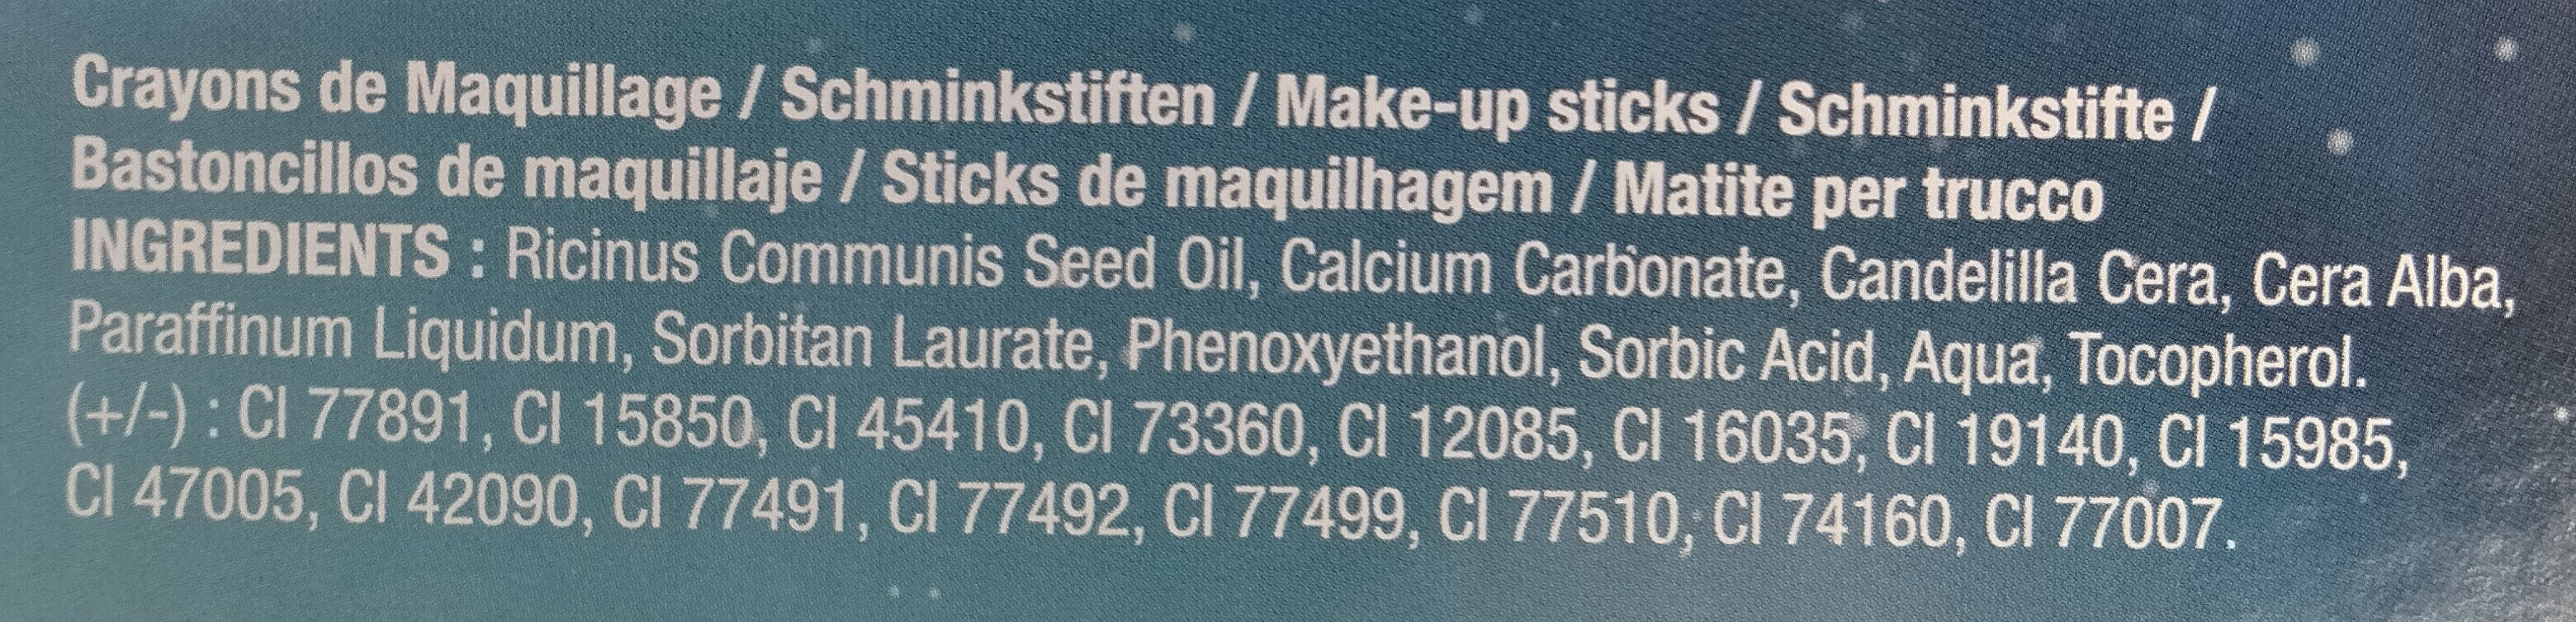 crayons de maquillage - Ingredientes - fr